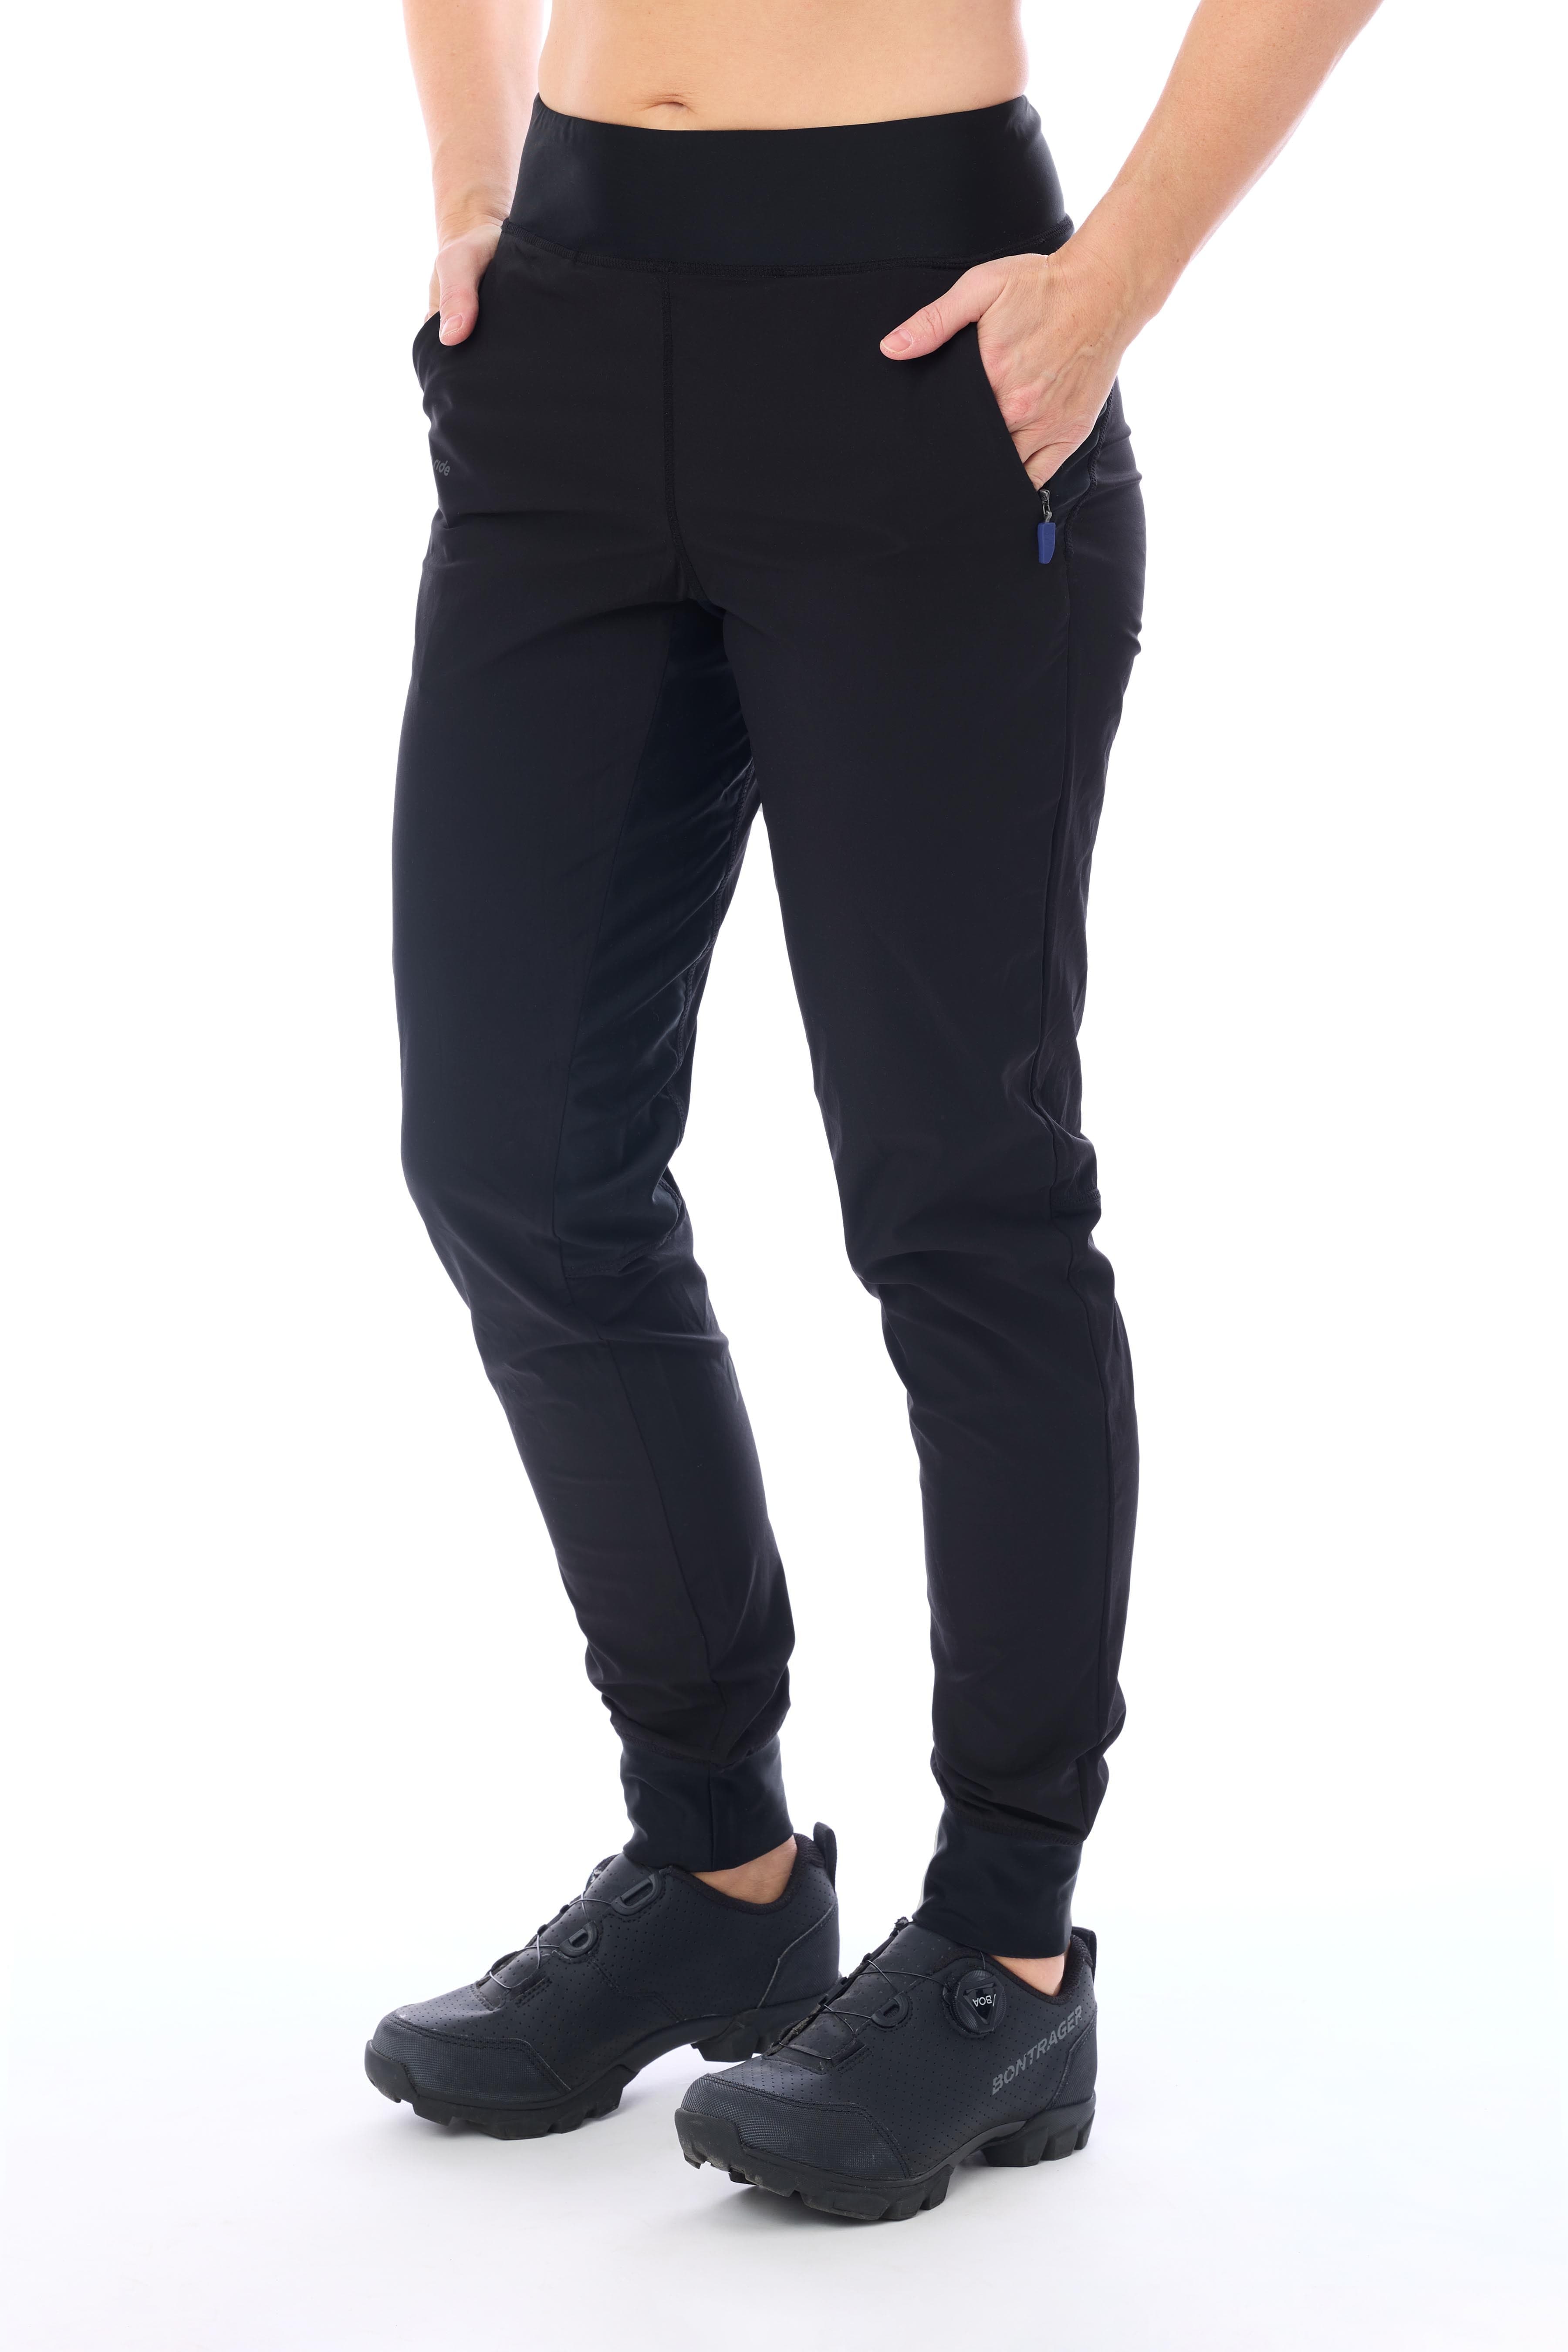 JolieRide Pants Black / XS mtb jogger pants  - lightweight with wide yoga-like waistband